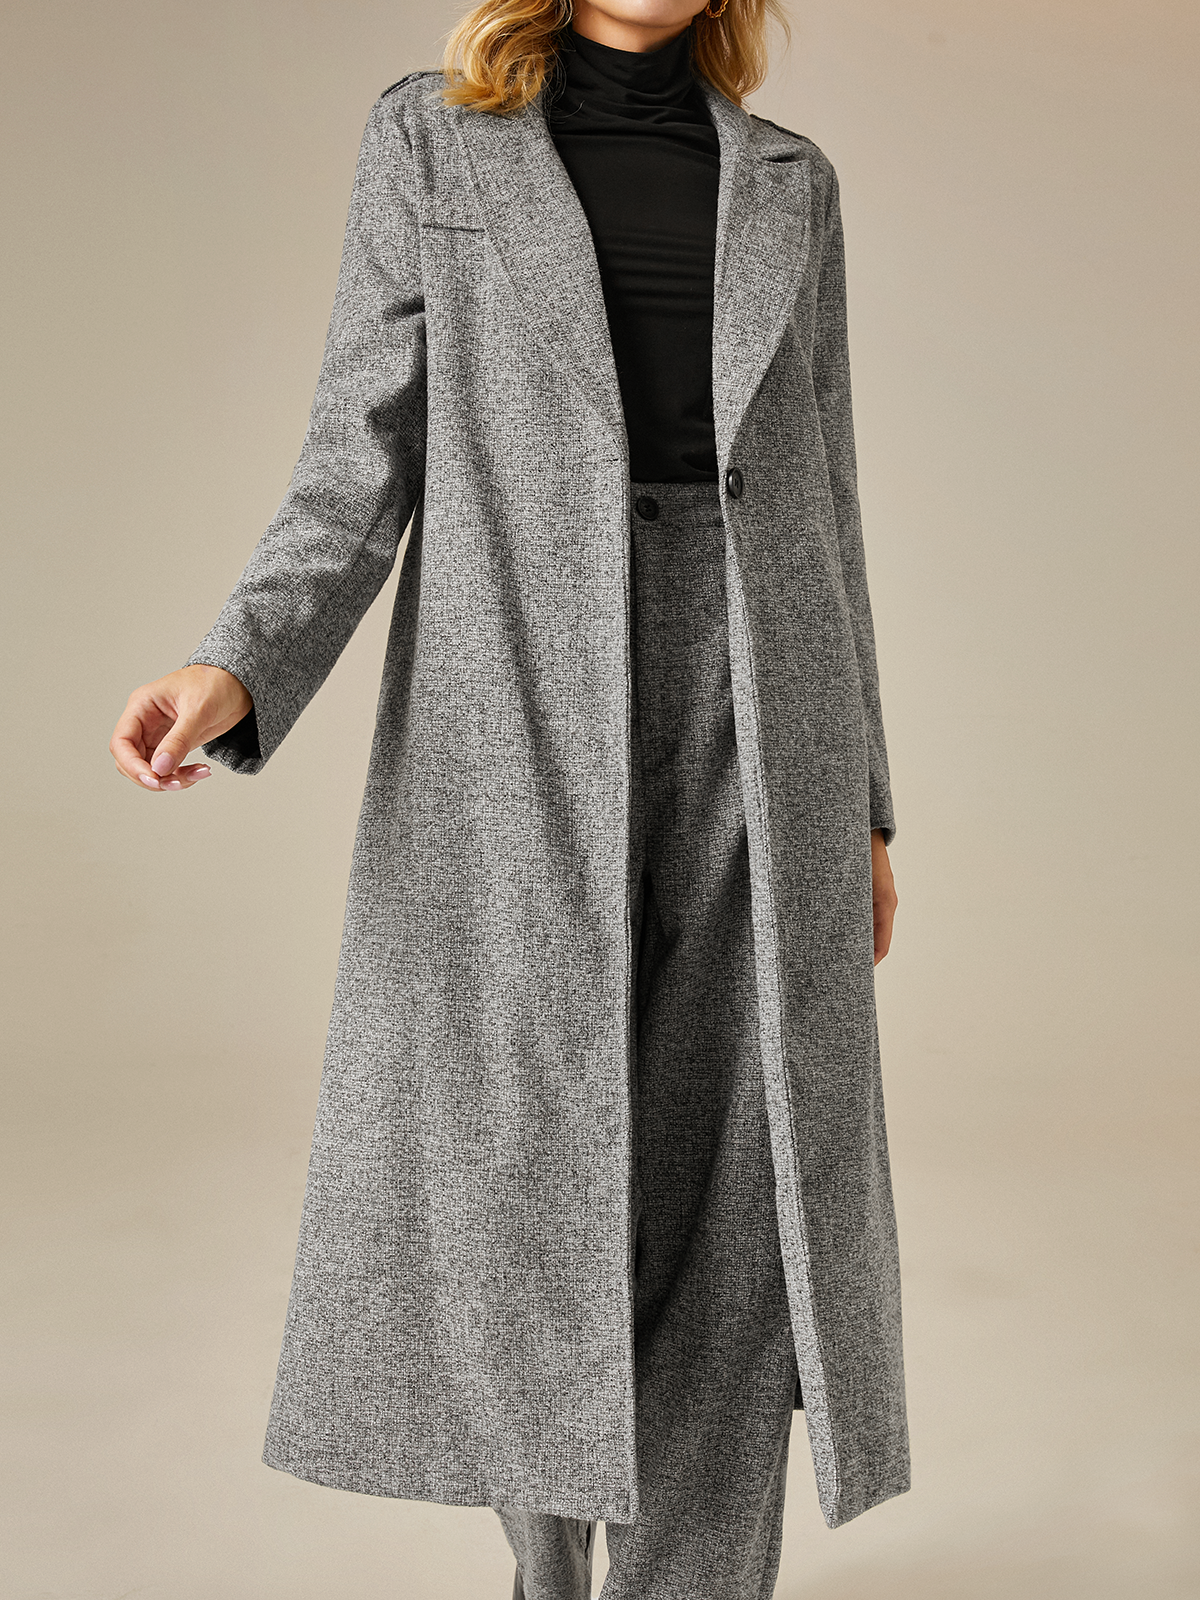 Urban Lapel Collar Long Sleeve Plain Coat With Belt